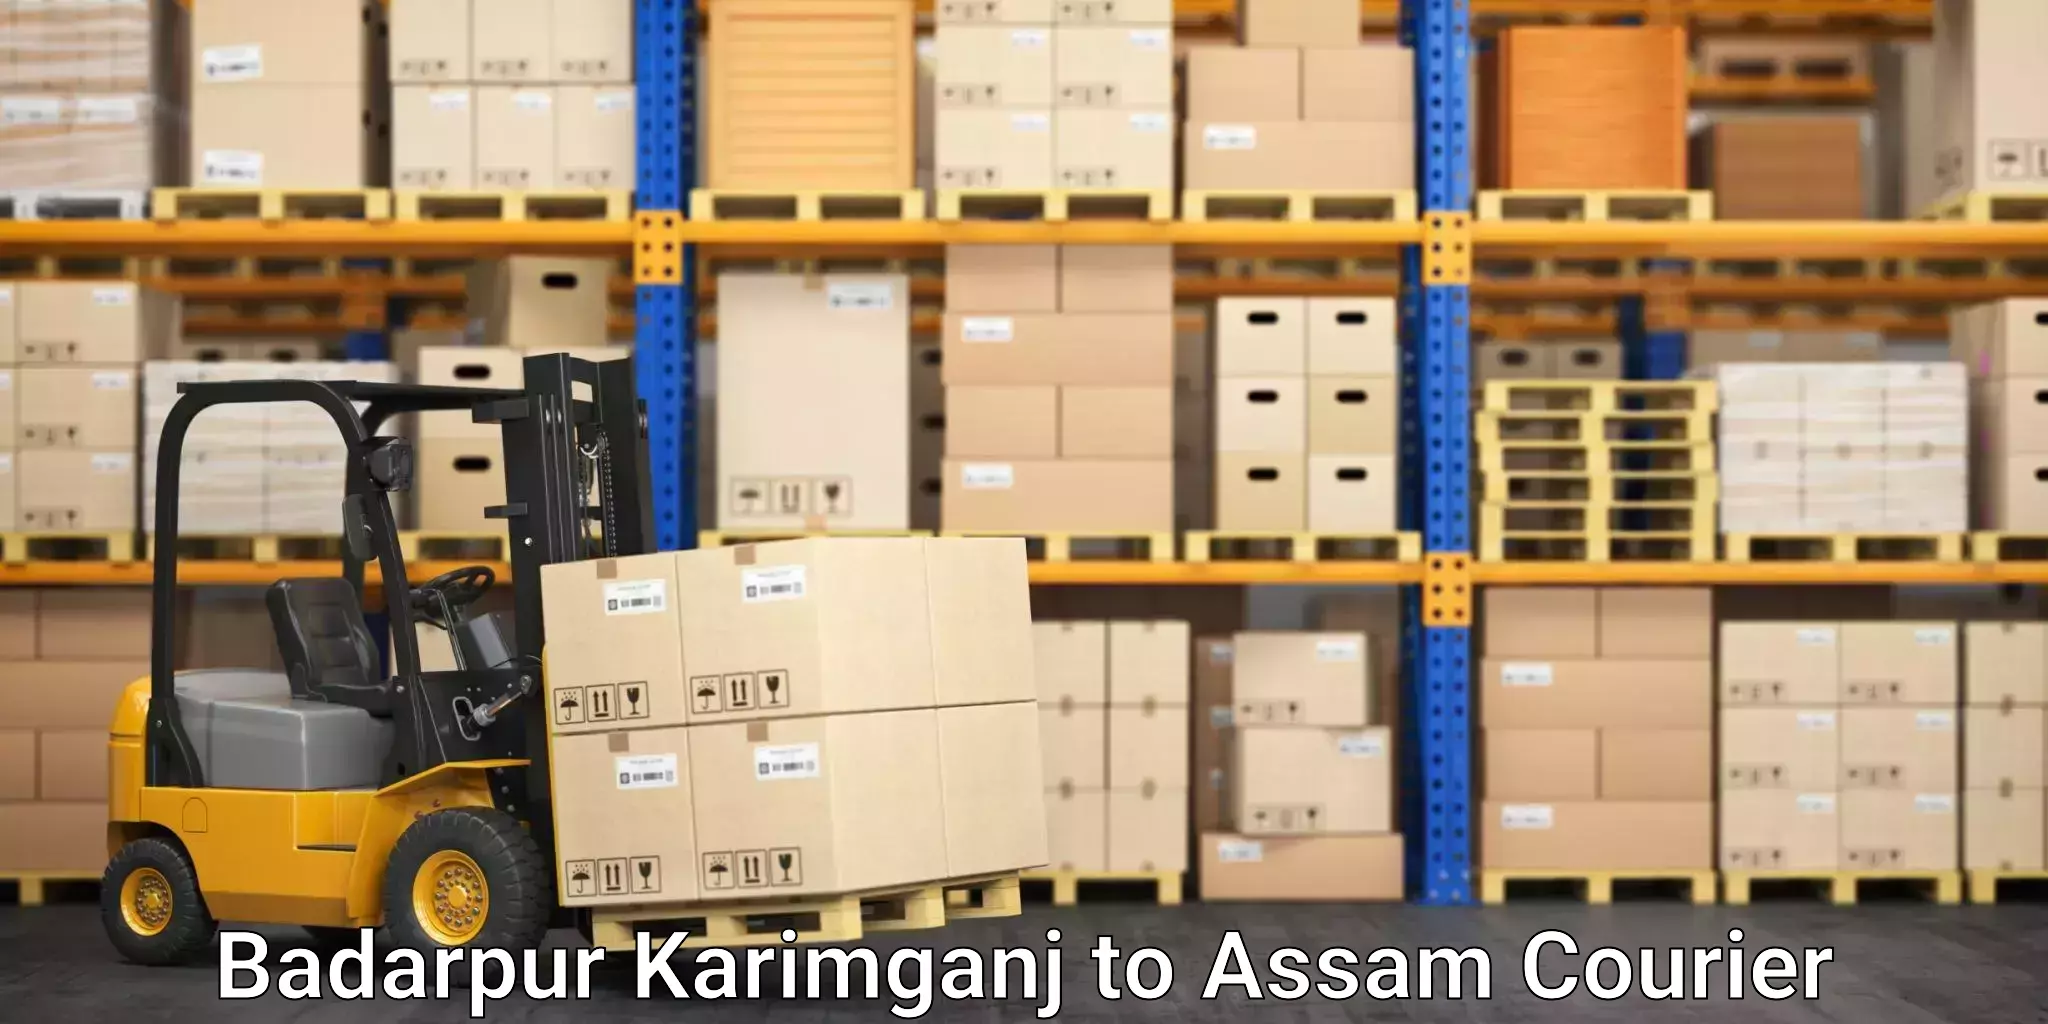 Cash on delivery service Badarpur Karimganj to Karimganj